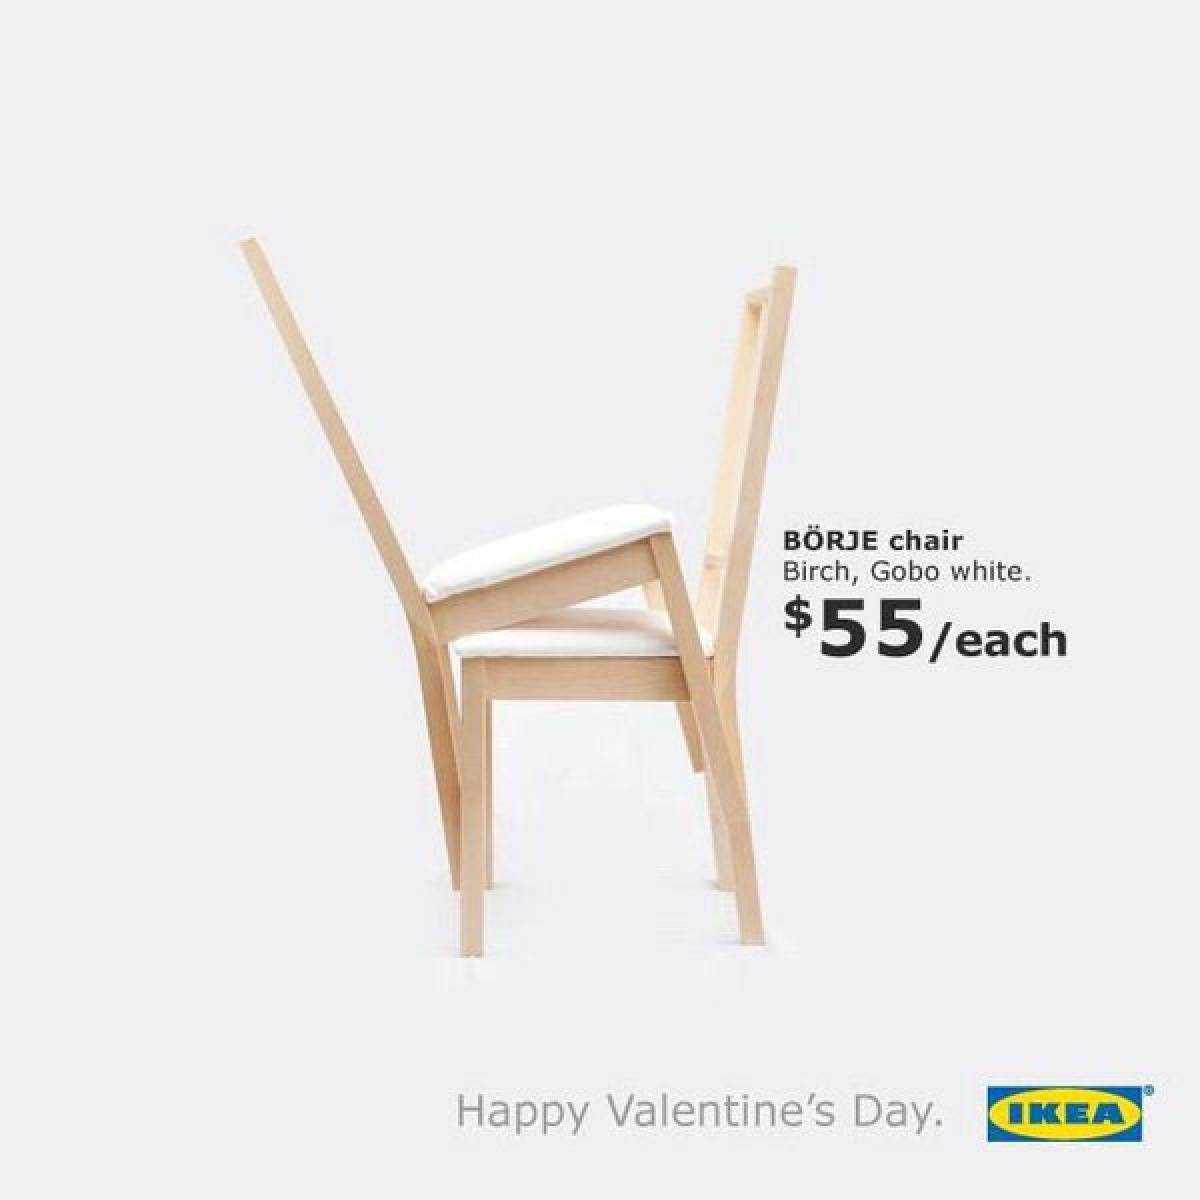 Реклама IKEA ко дню Св. Валентина